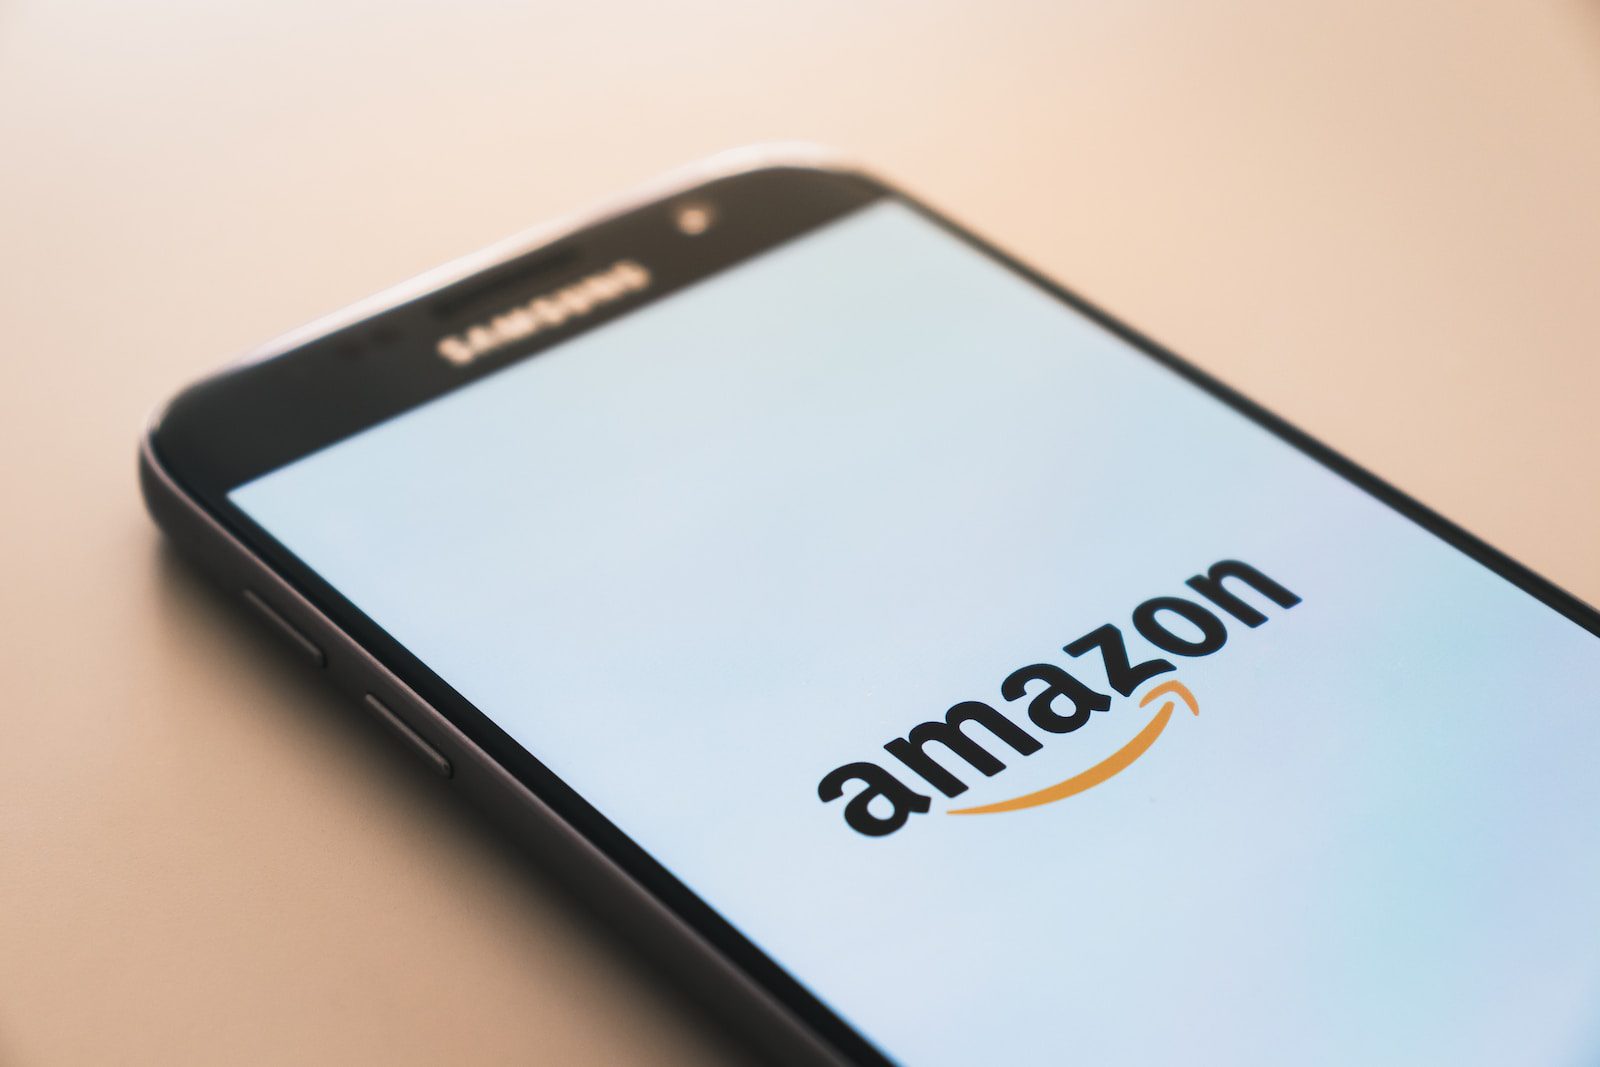 Massaclaim tegen Amazon ingediend wegens privacyschending